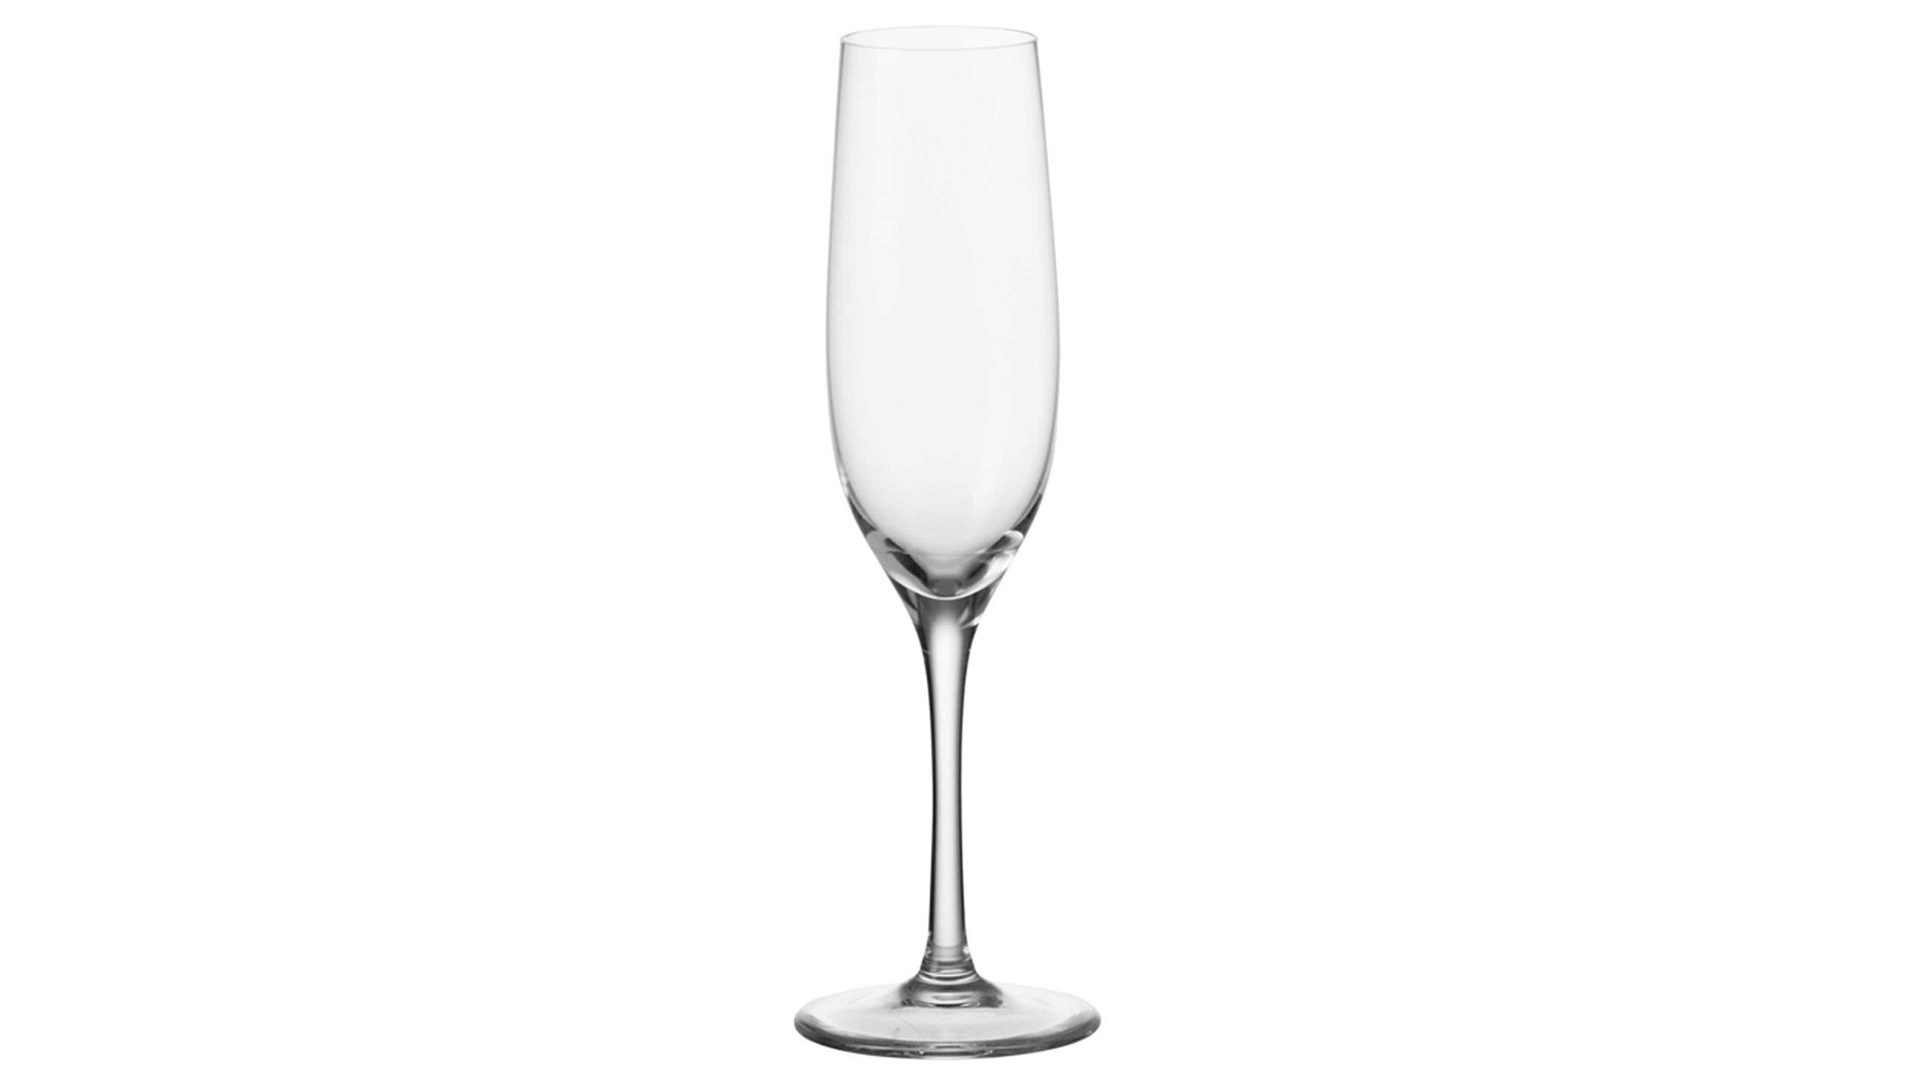 Sektglas Leonardo | glaskoch aus Glas in Transparent LEONARDO Sektglas Ciao+ TEQTON®-Klarglas - ca. 130 ml Fassungsvermögen